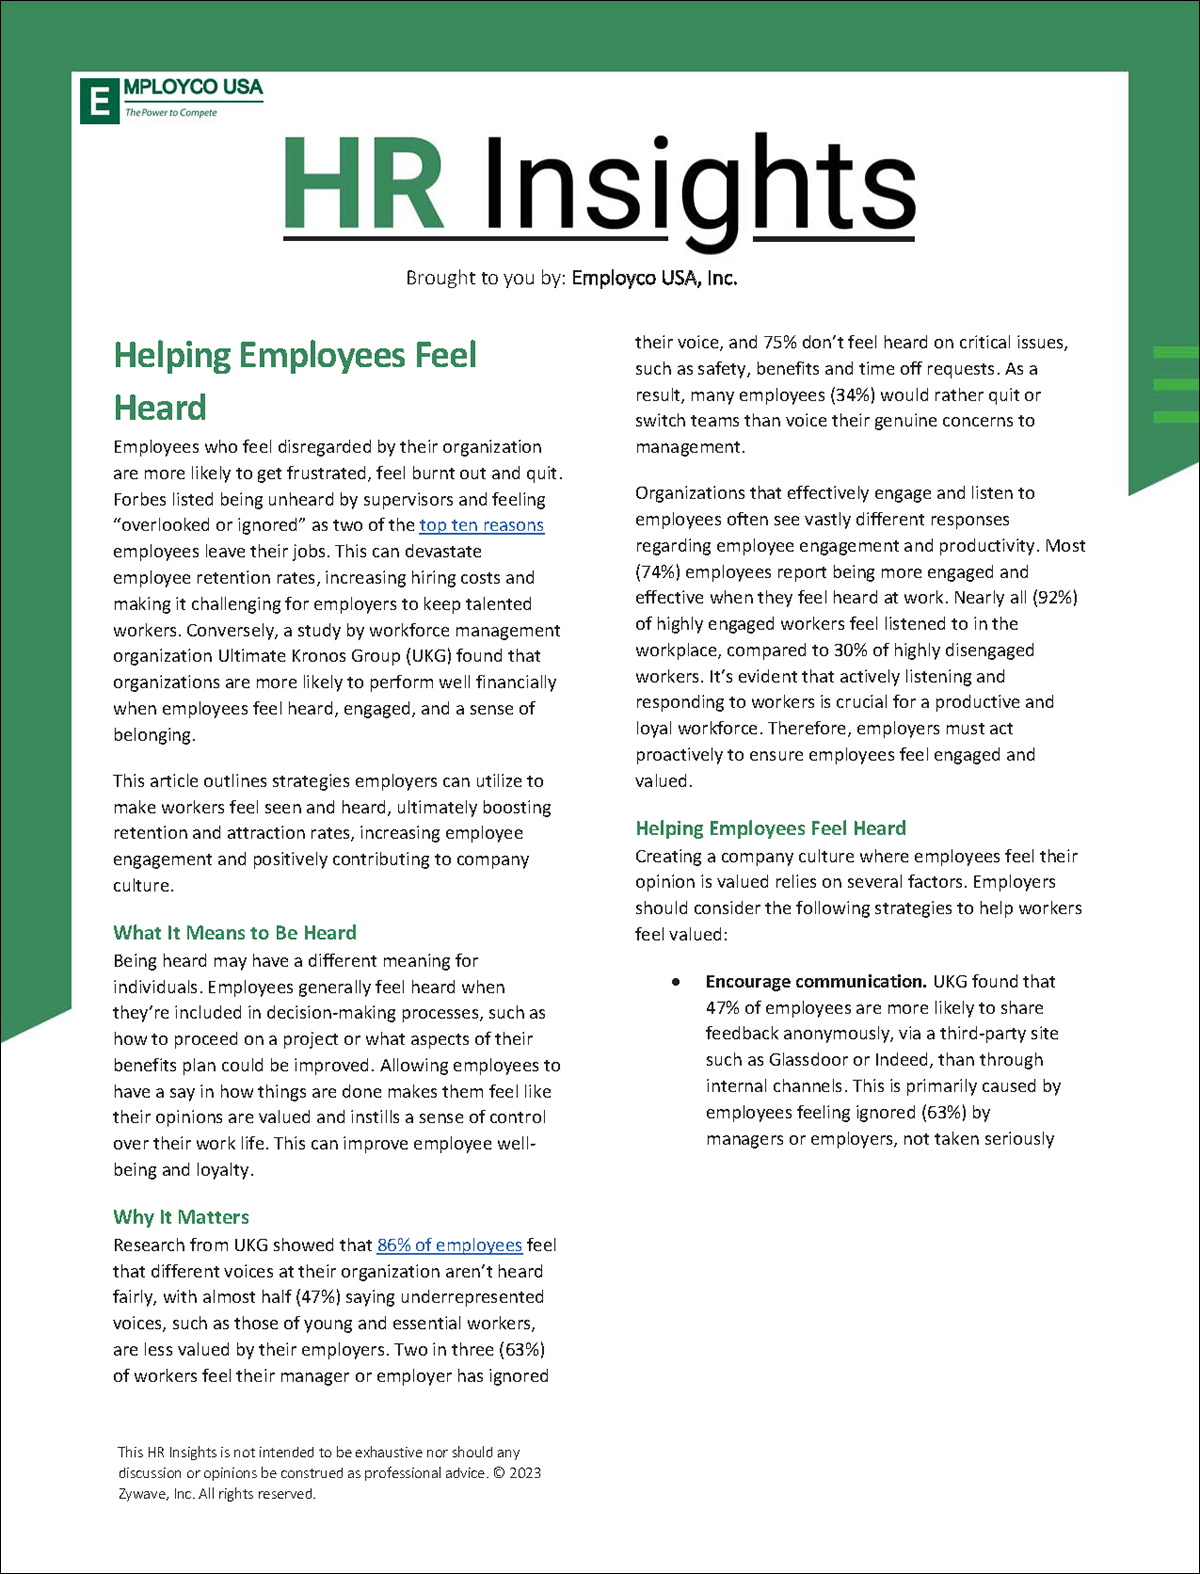 HR Insights: Helping Employees Feel Heard